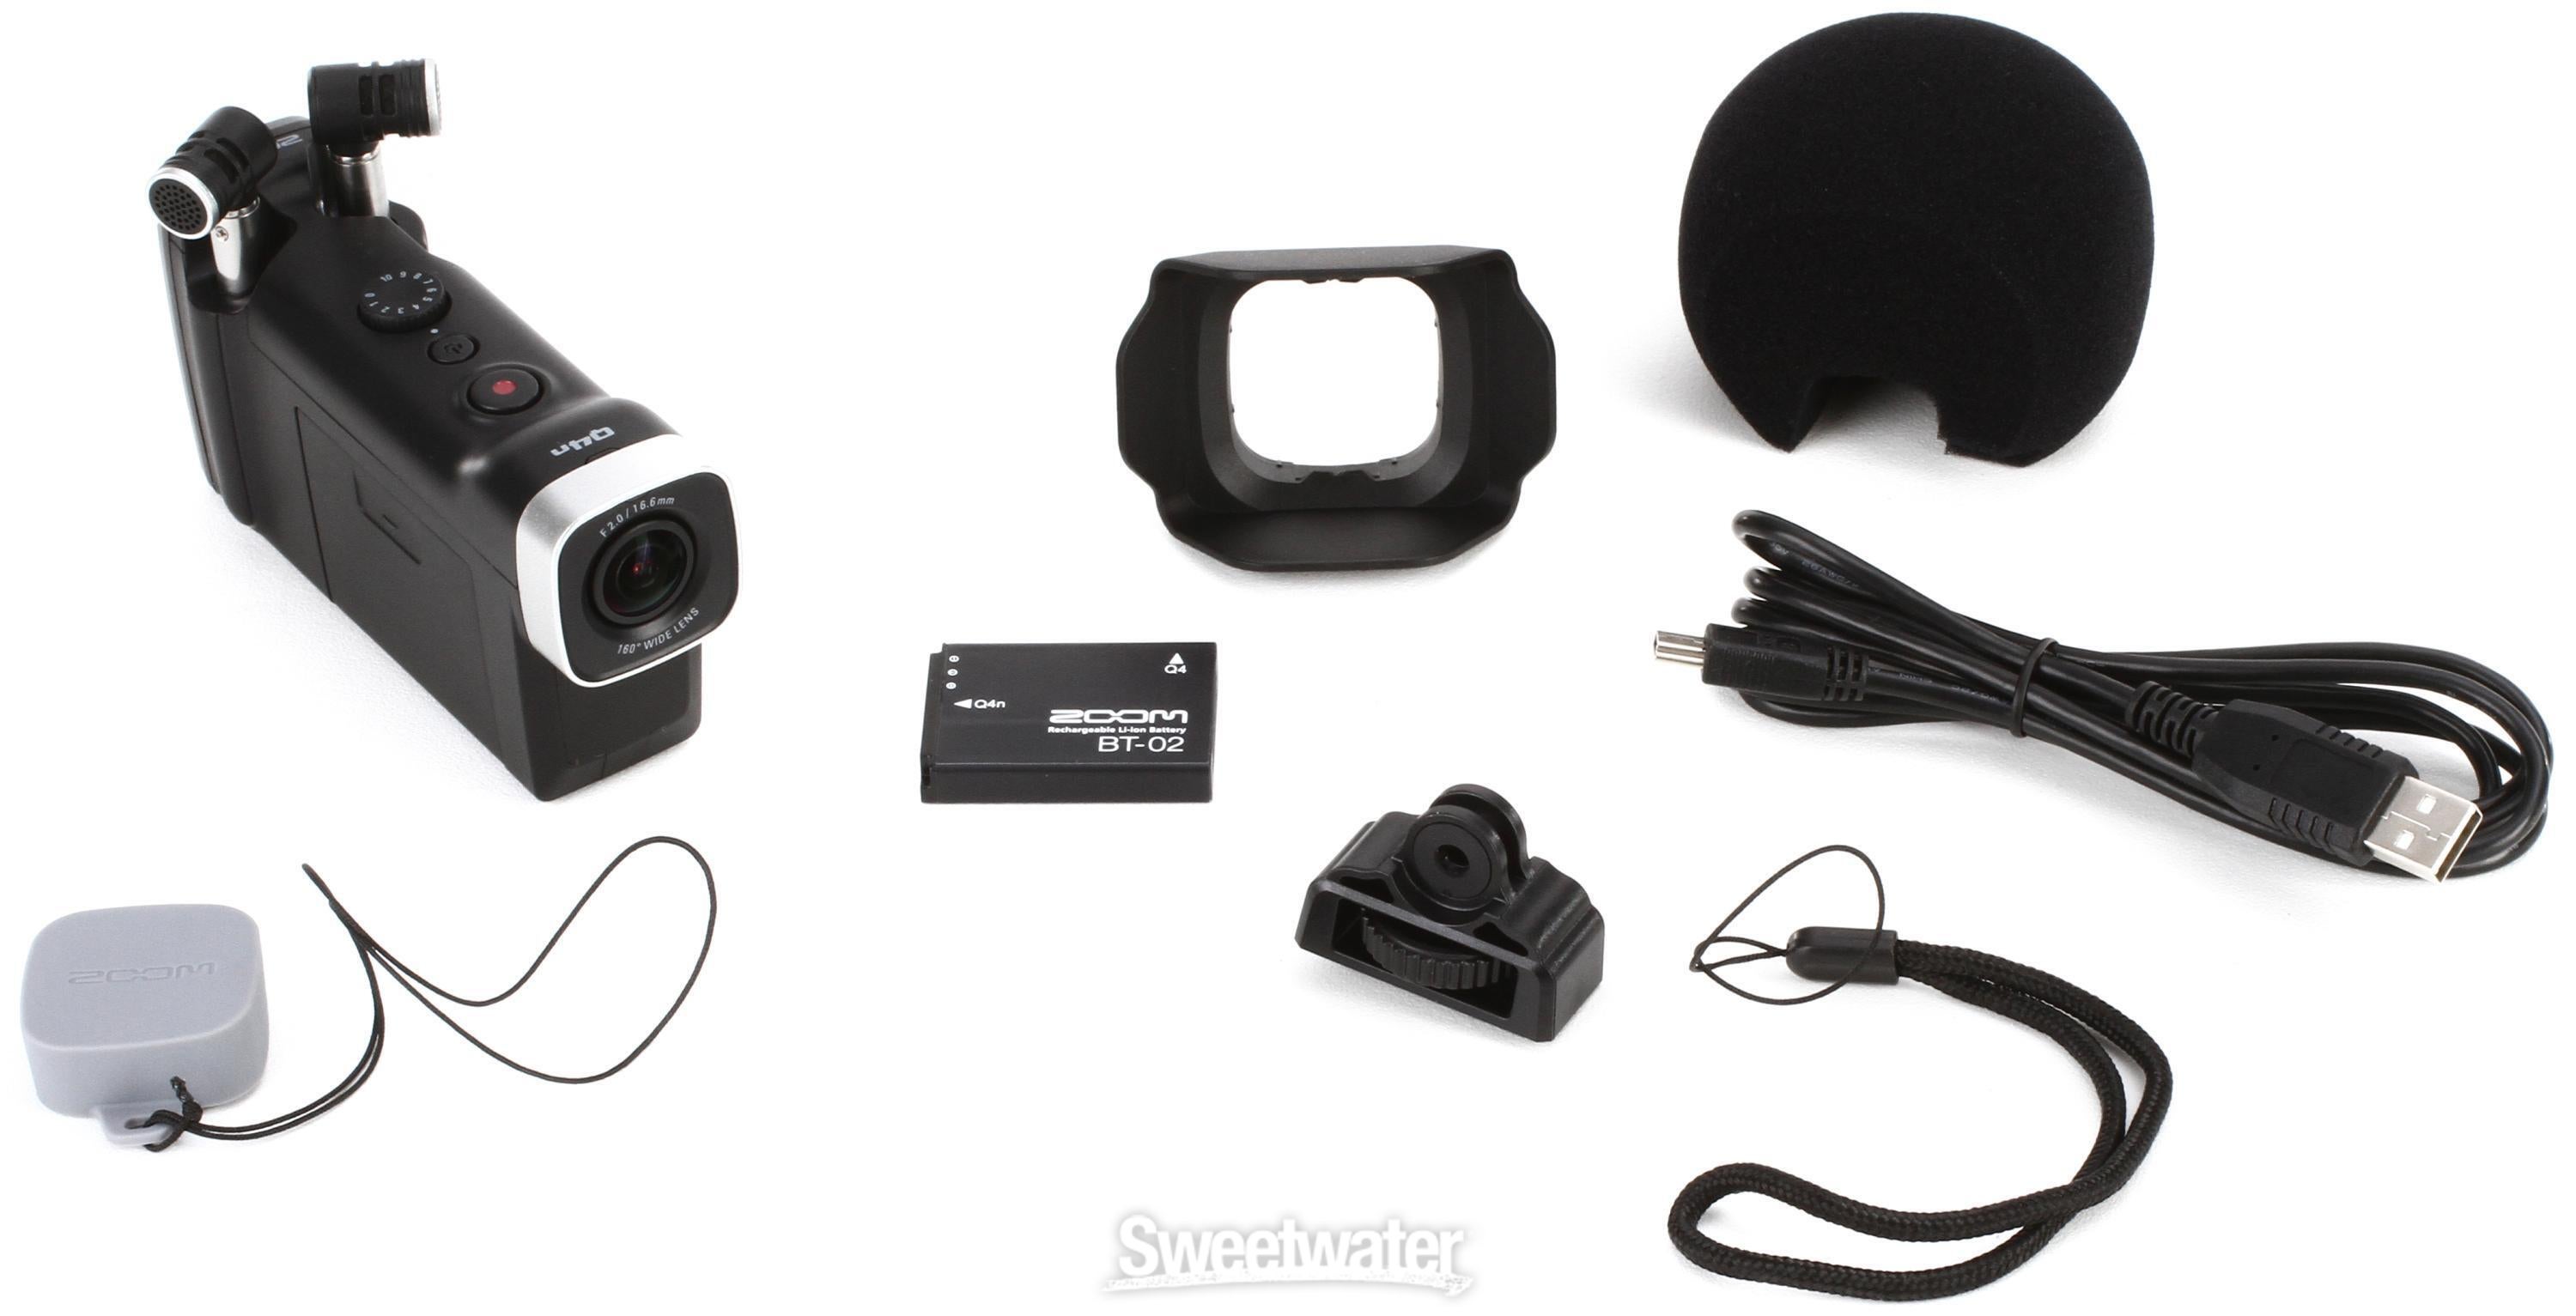 Zoom Q4n 2.3K HD Handy Video Recorder Reviews | Sweetwater